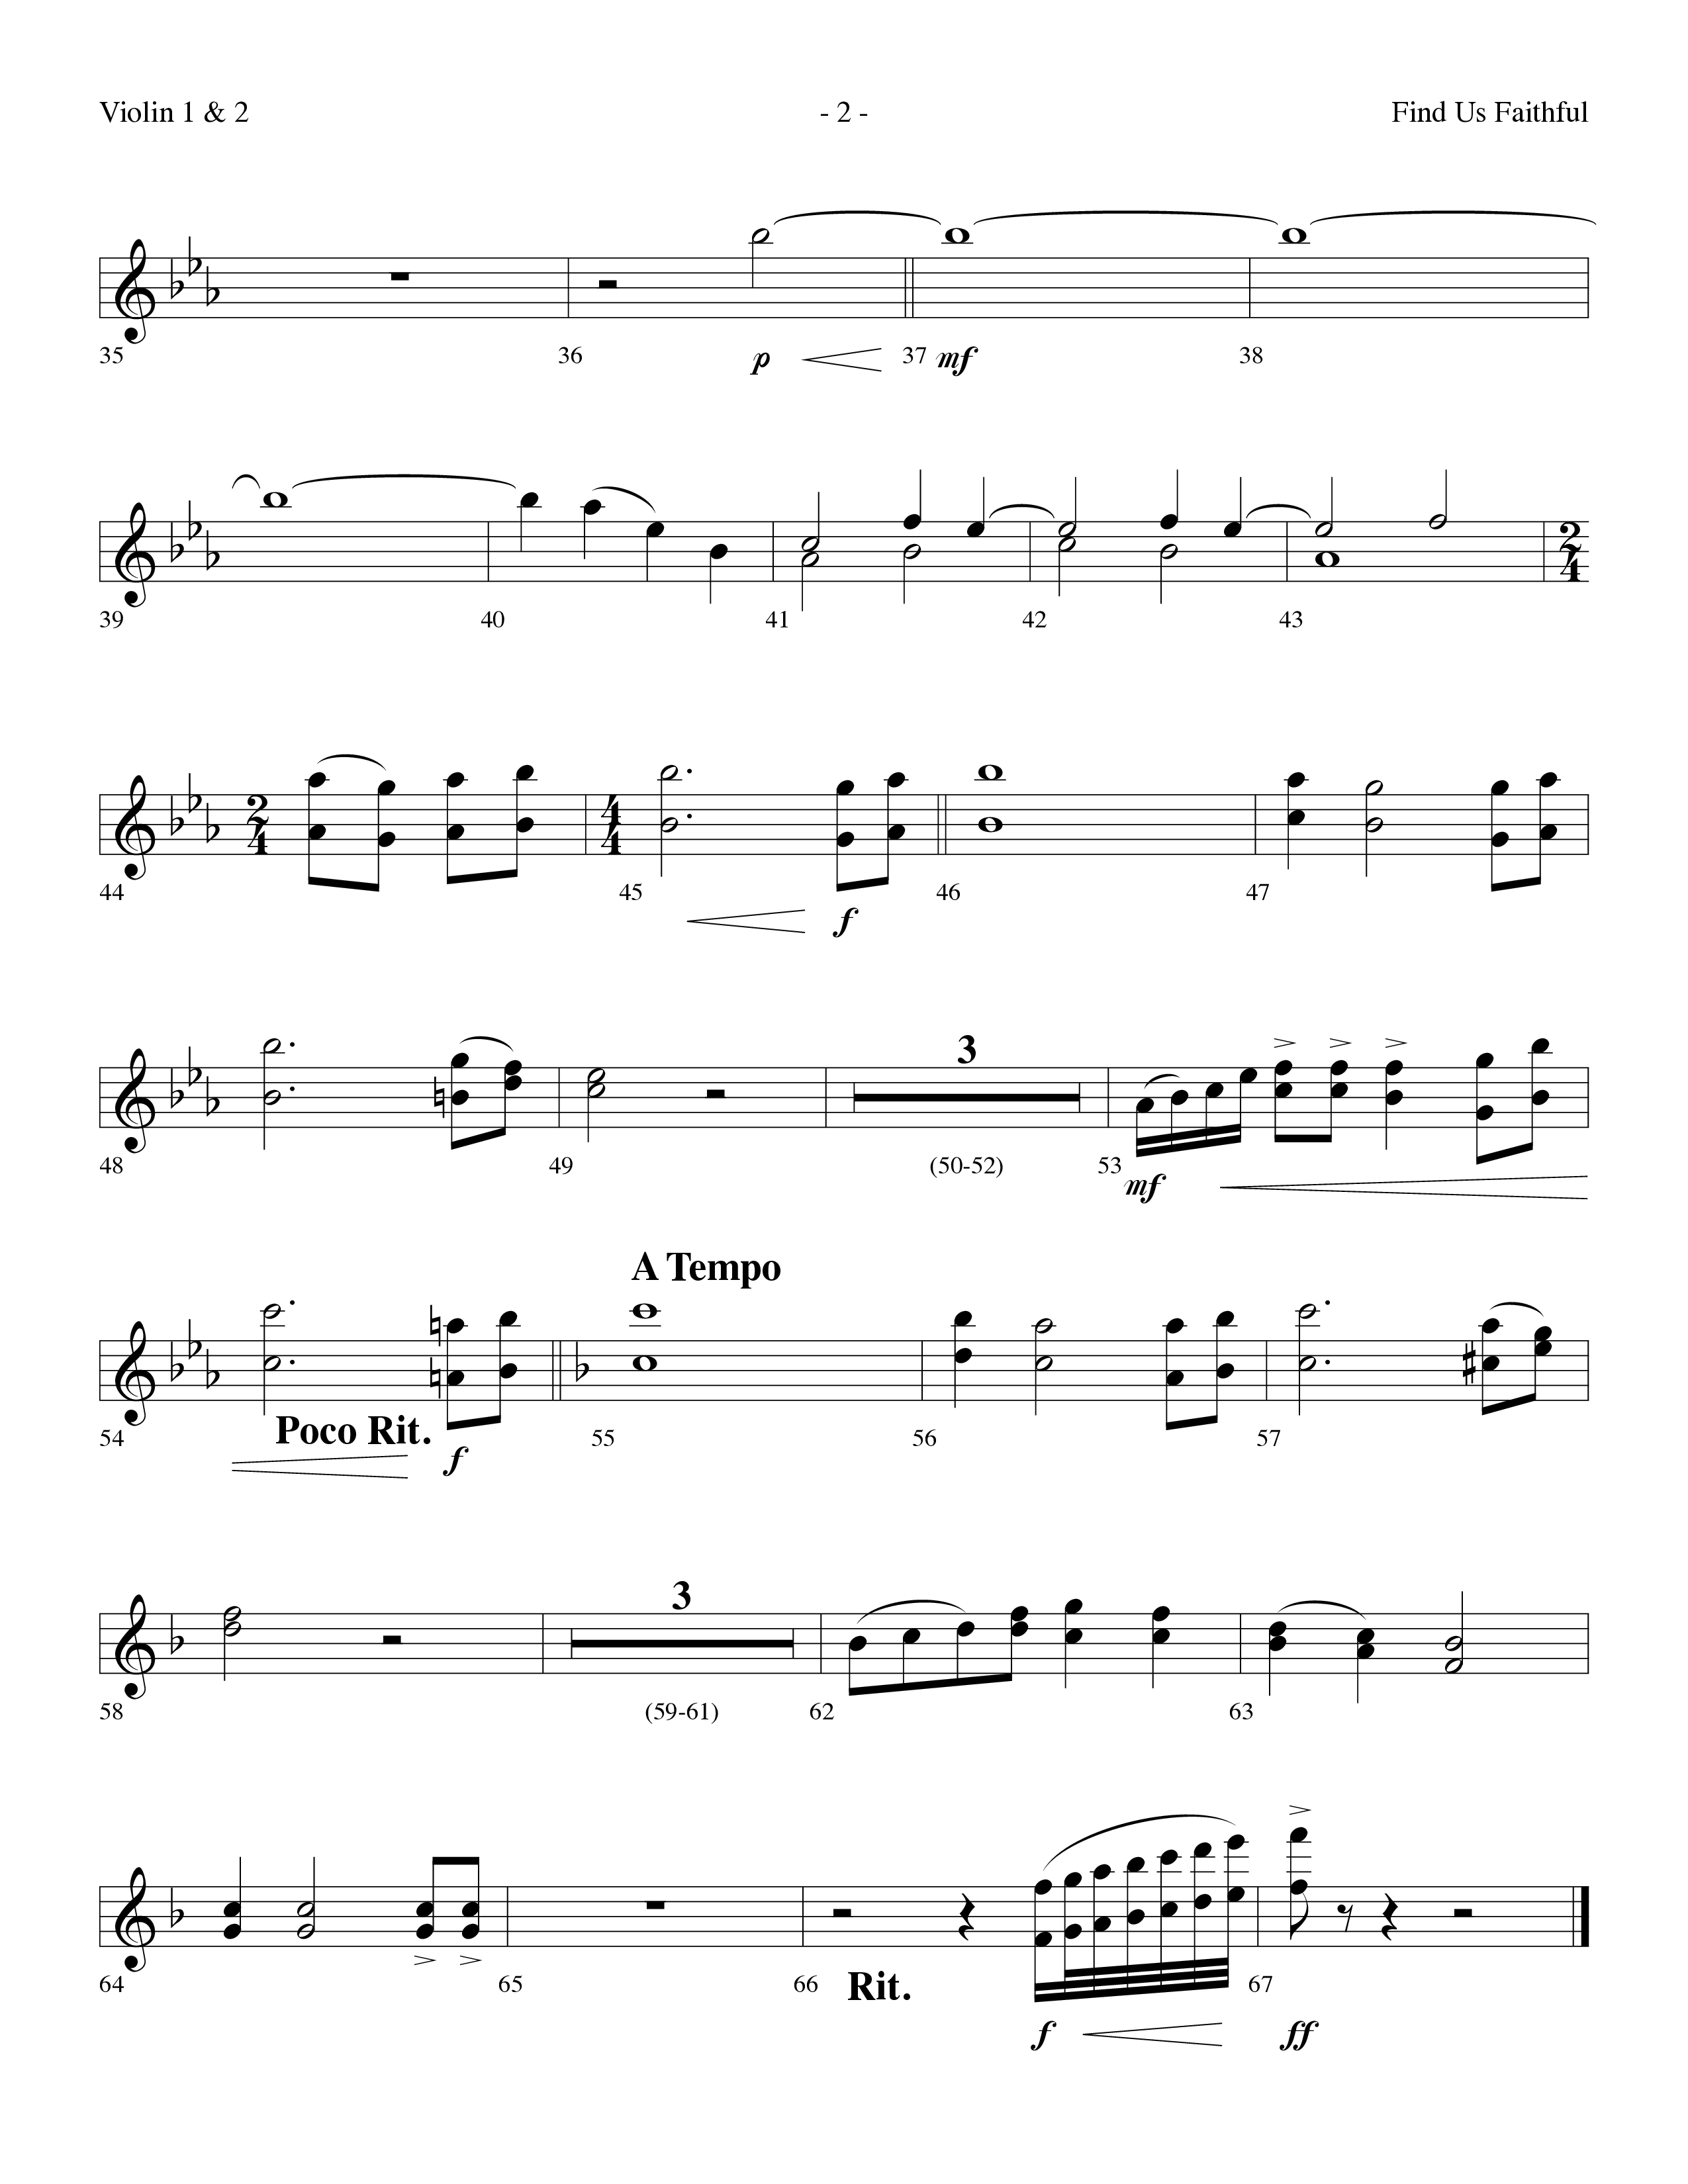 Find Us Faithful (Choral Anthem SATB) Violin 1/2 (Lifeway Choral / Arr. Dennis Allen)